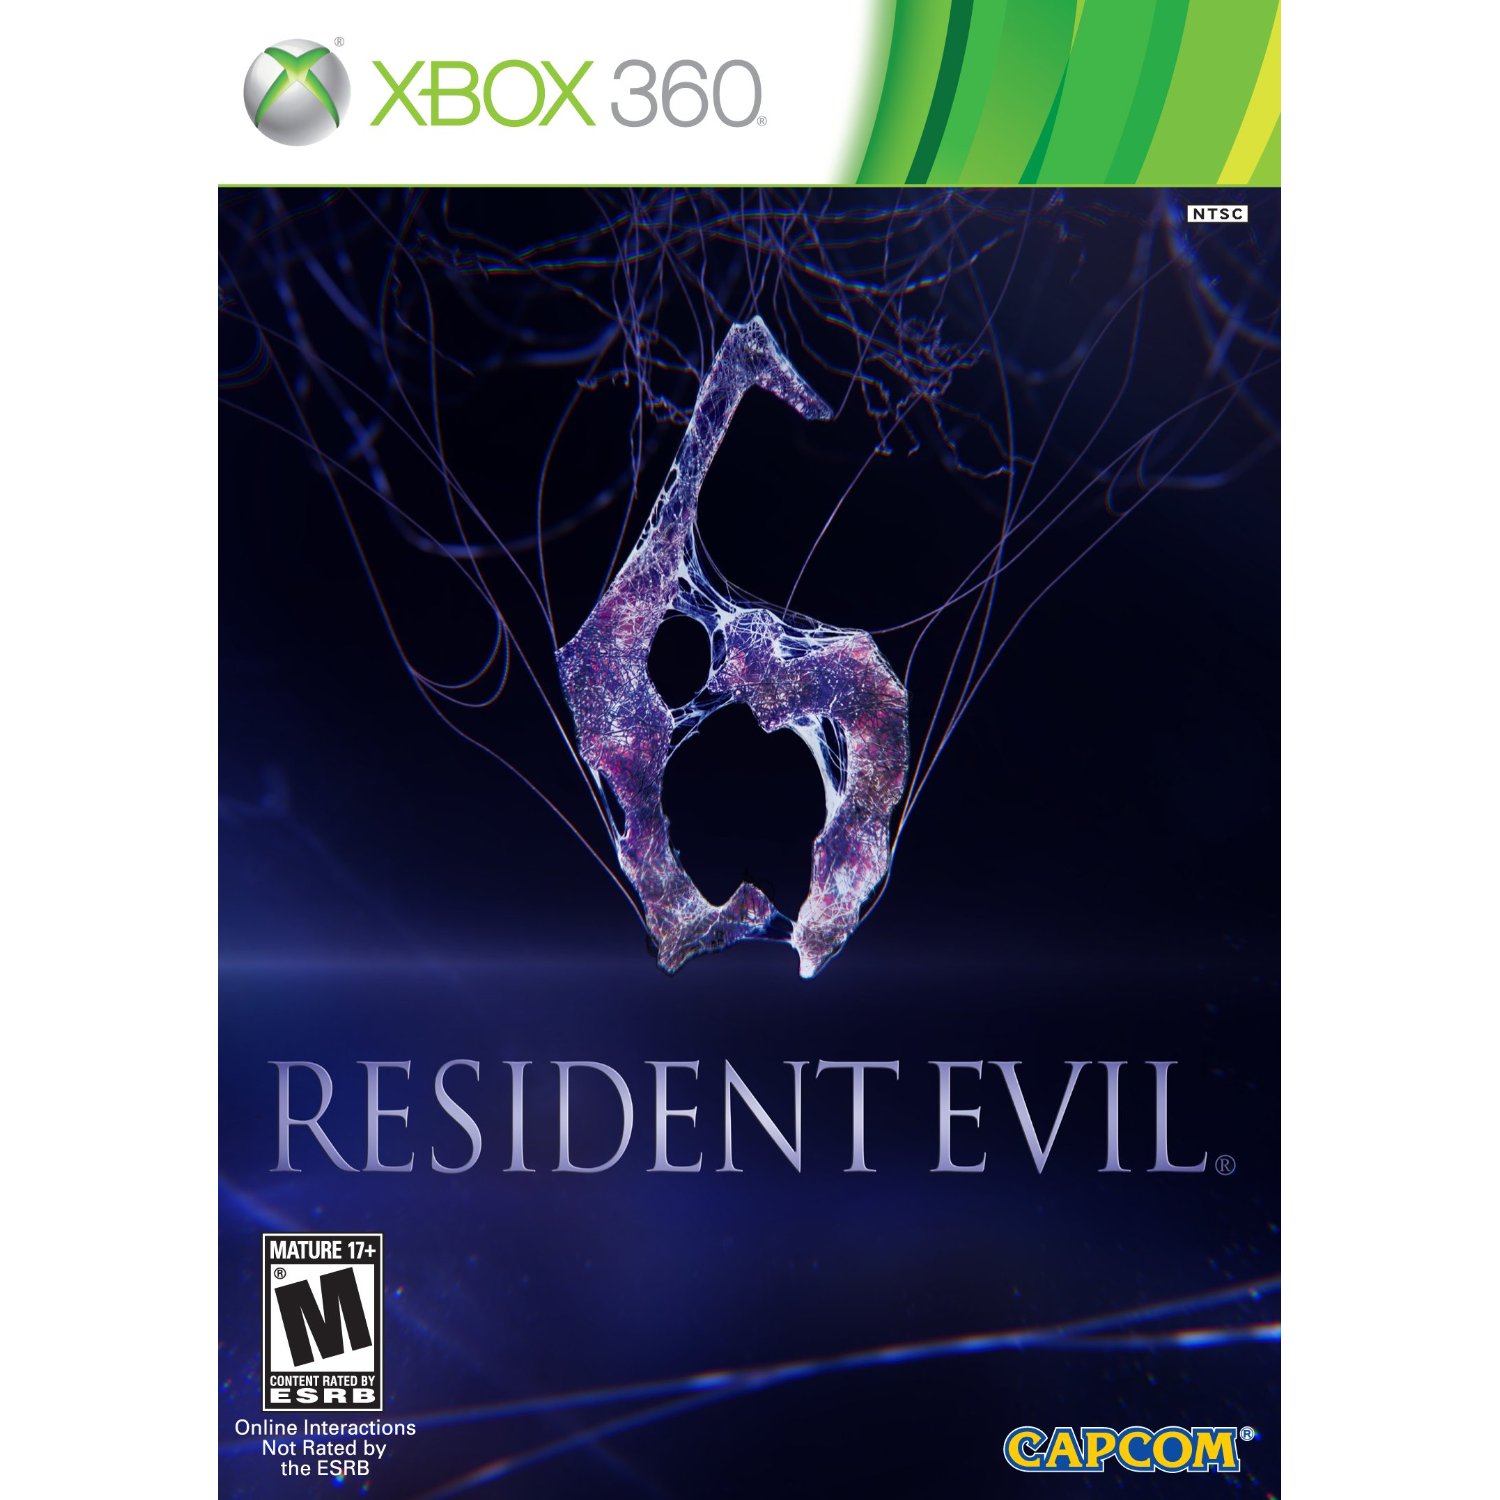 RE6-Xbox-360-game-Standard-Edition-resident-evil-6-31332313-1500-1500.jpg